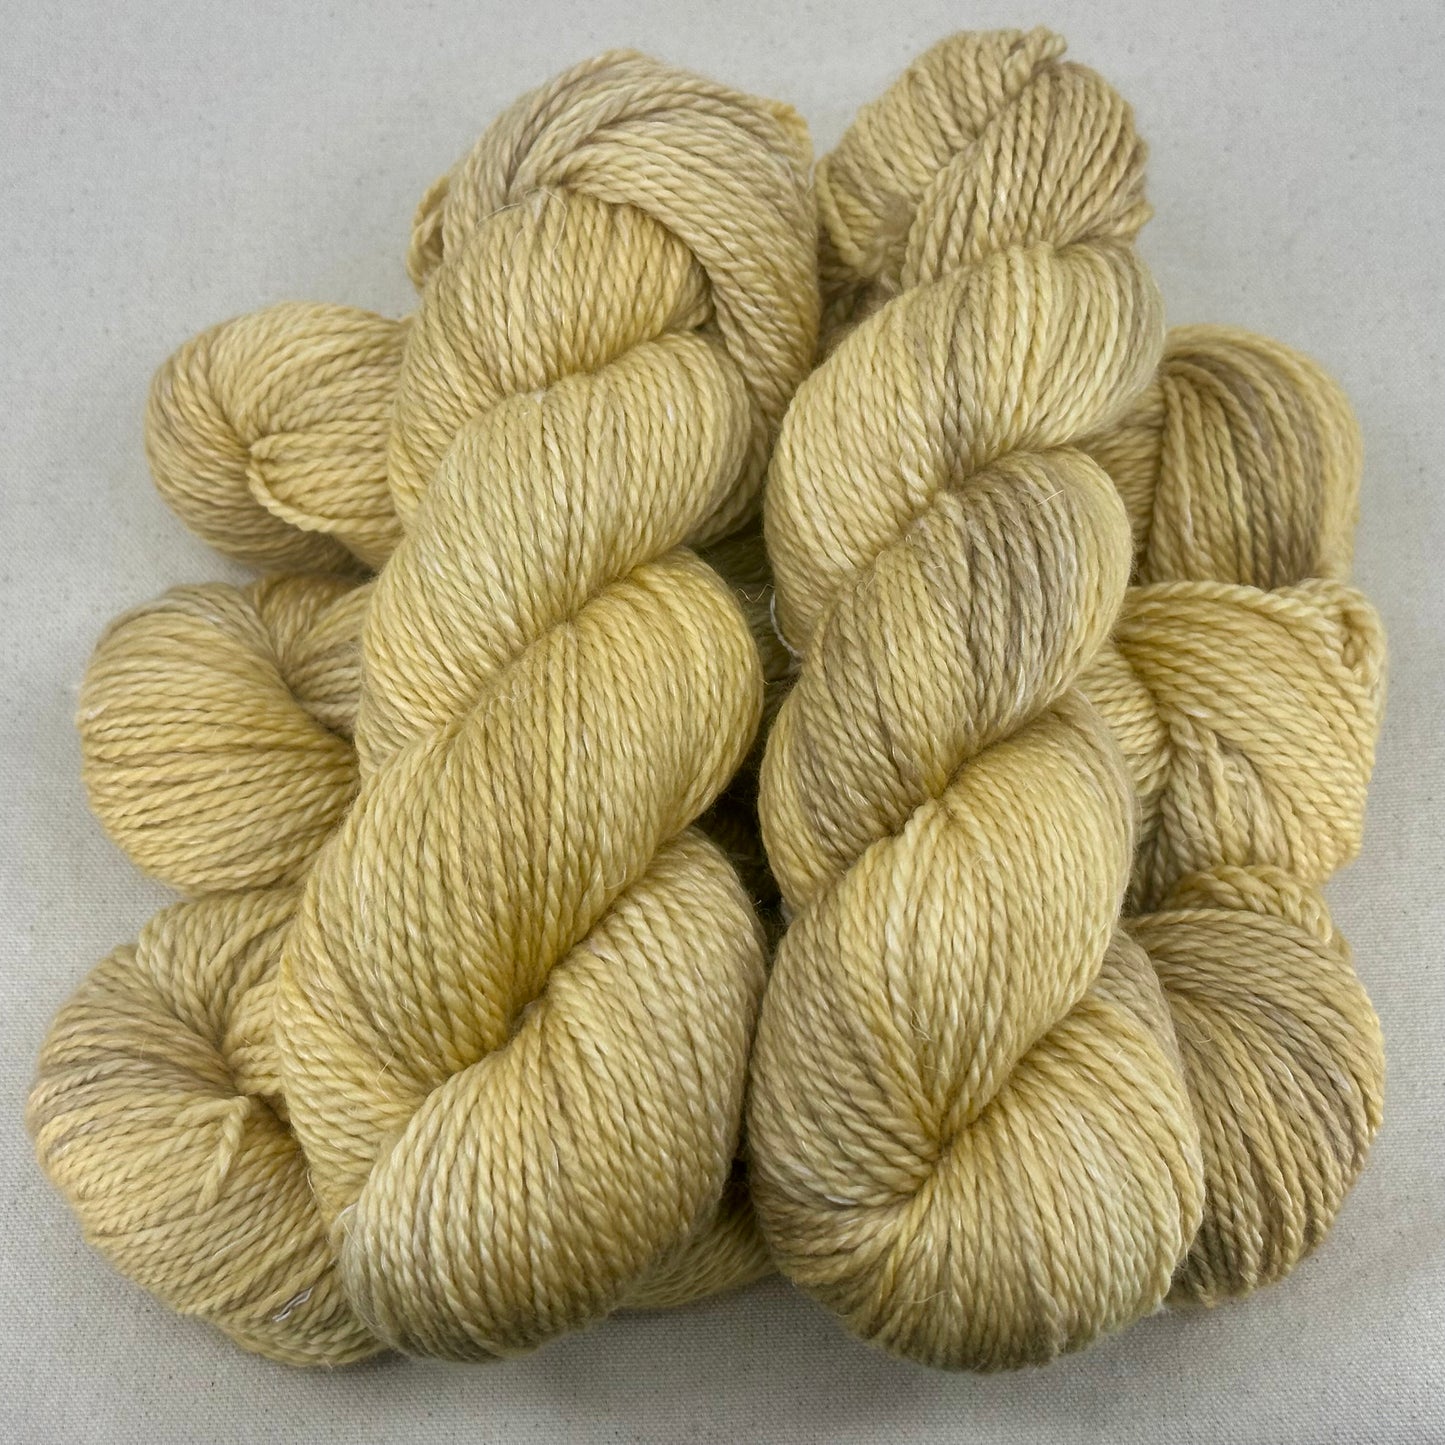 Woolly Flax Aran - Buttercup